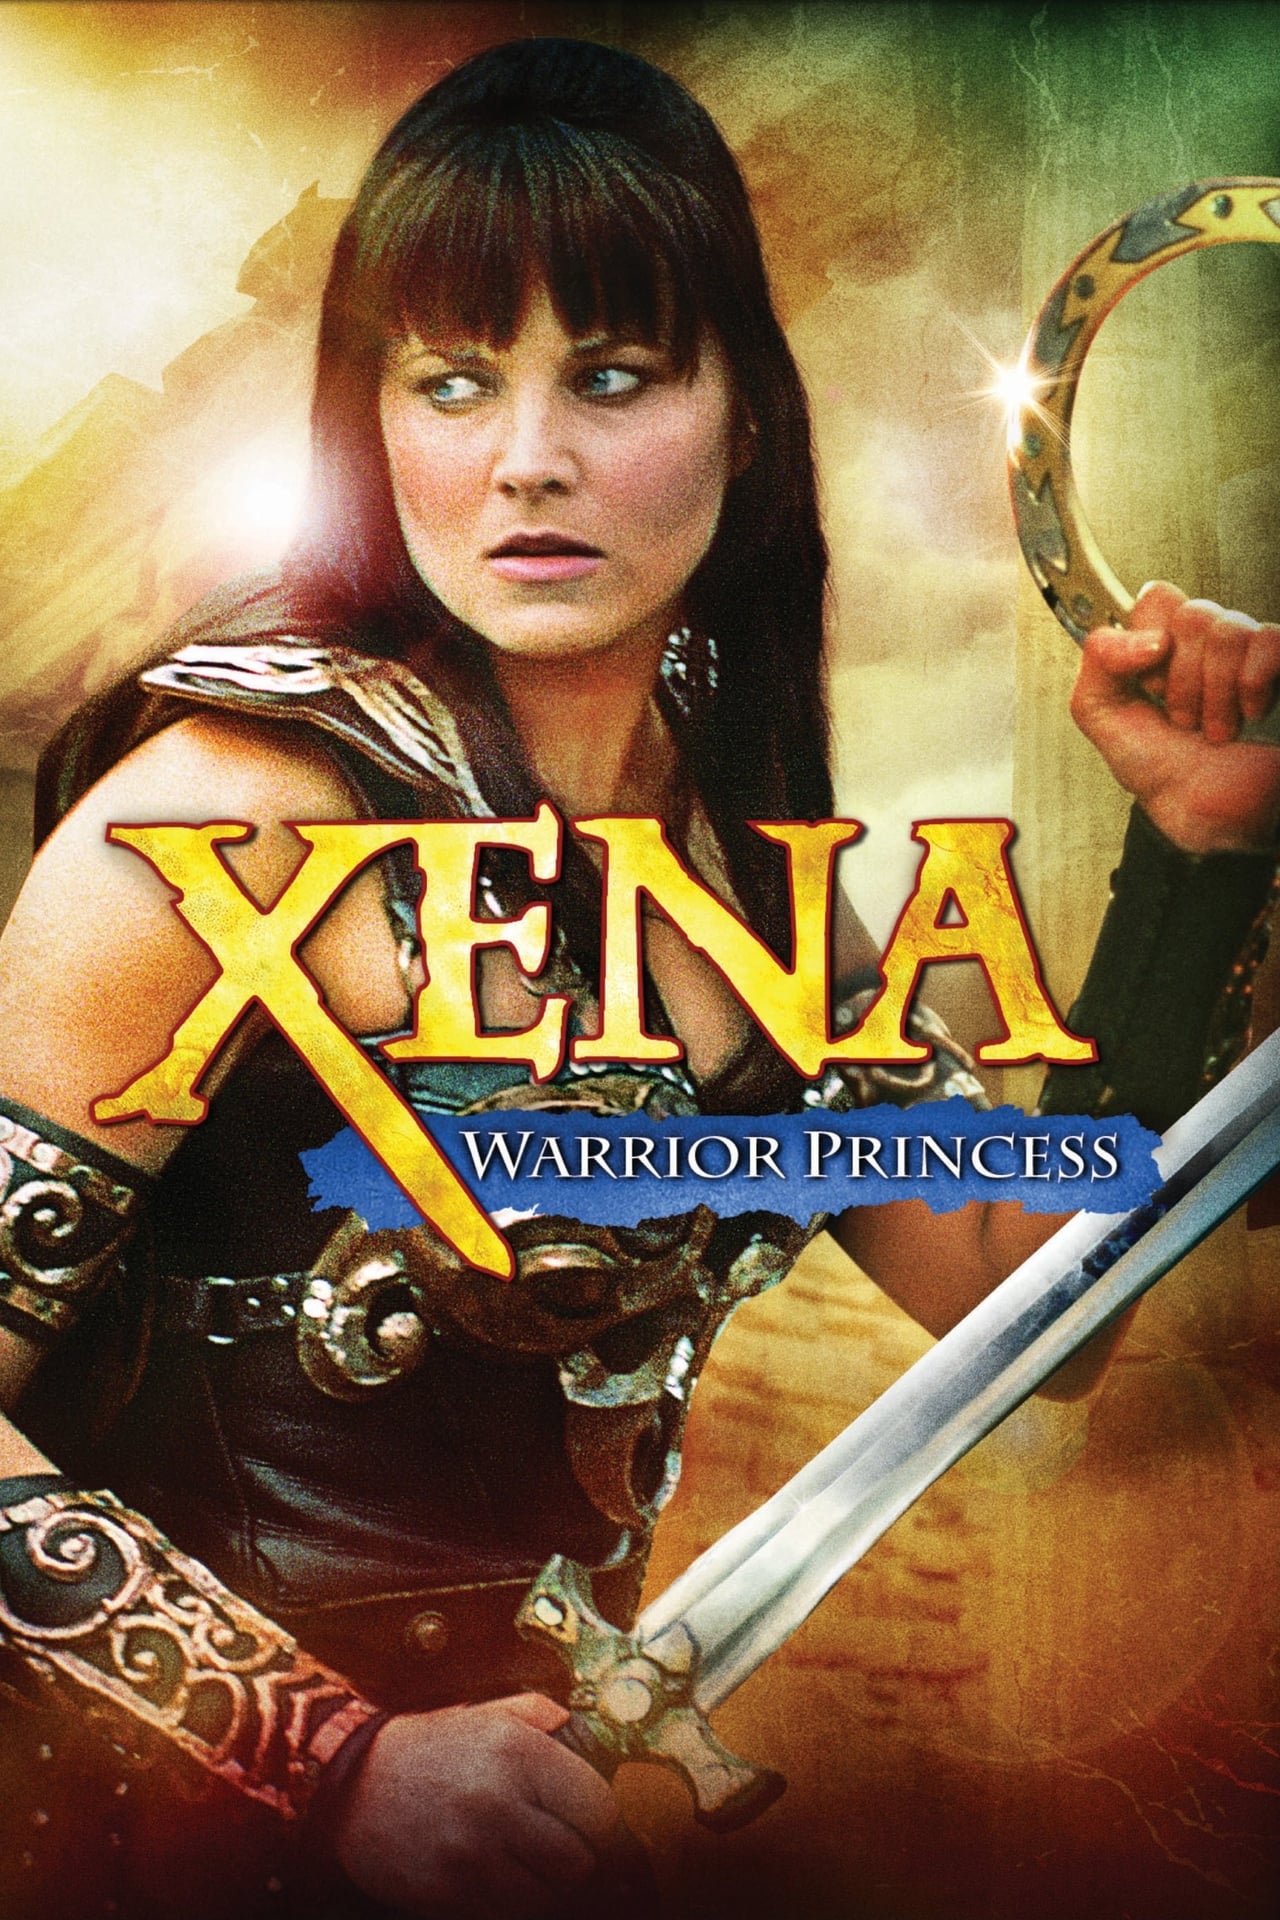 Plakát pro film “Xena: Princezna bojovnice”